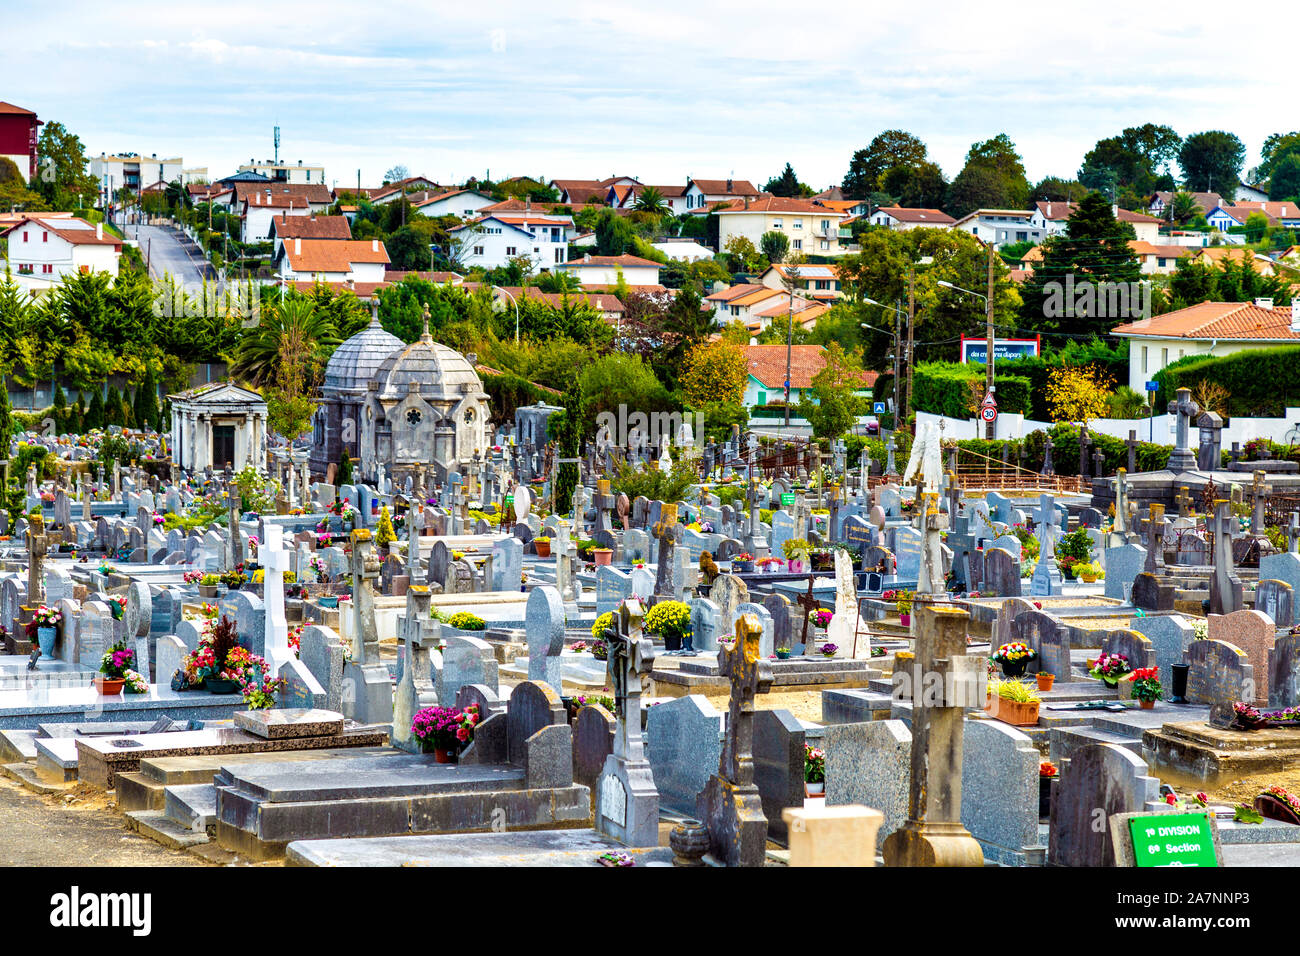 Sabaou Cemetery (Cimetière du Sabaou) in Biarritz, France Stock Photo